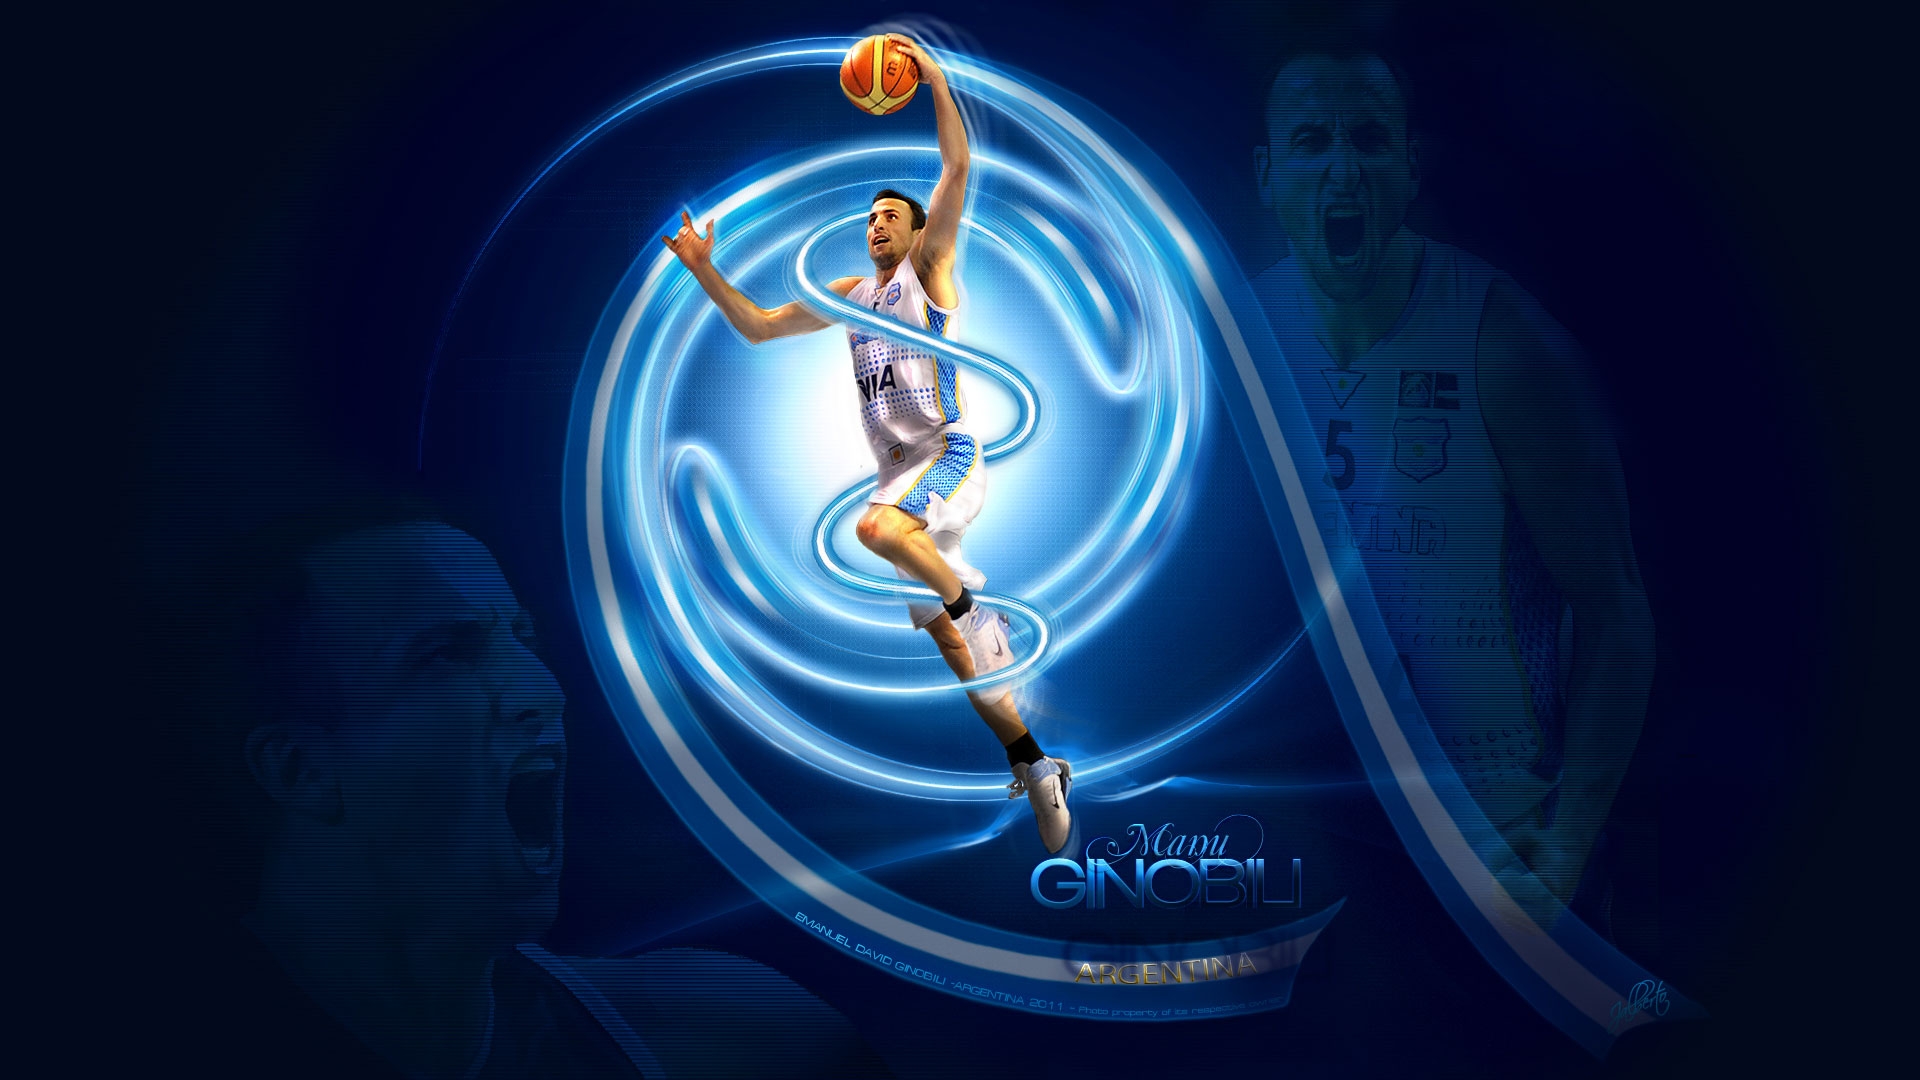 Manu Ginobili NBA Wallpaper - High Definition, High Resolution HD Wallpapers  : High Definition, High Resolution HD Wallpapers